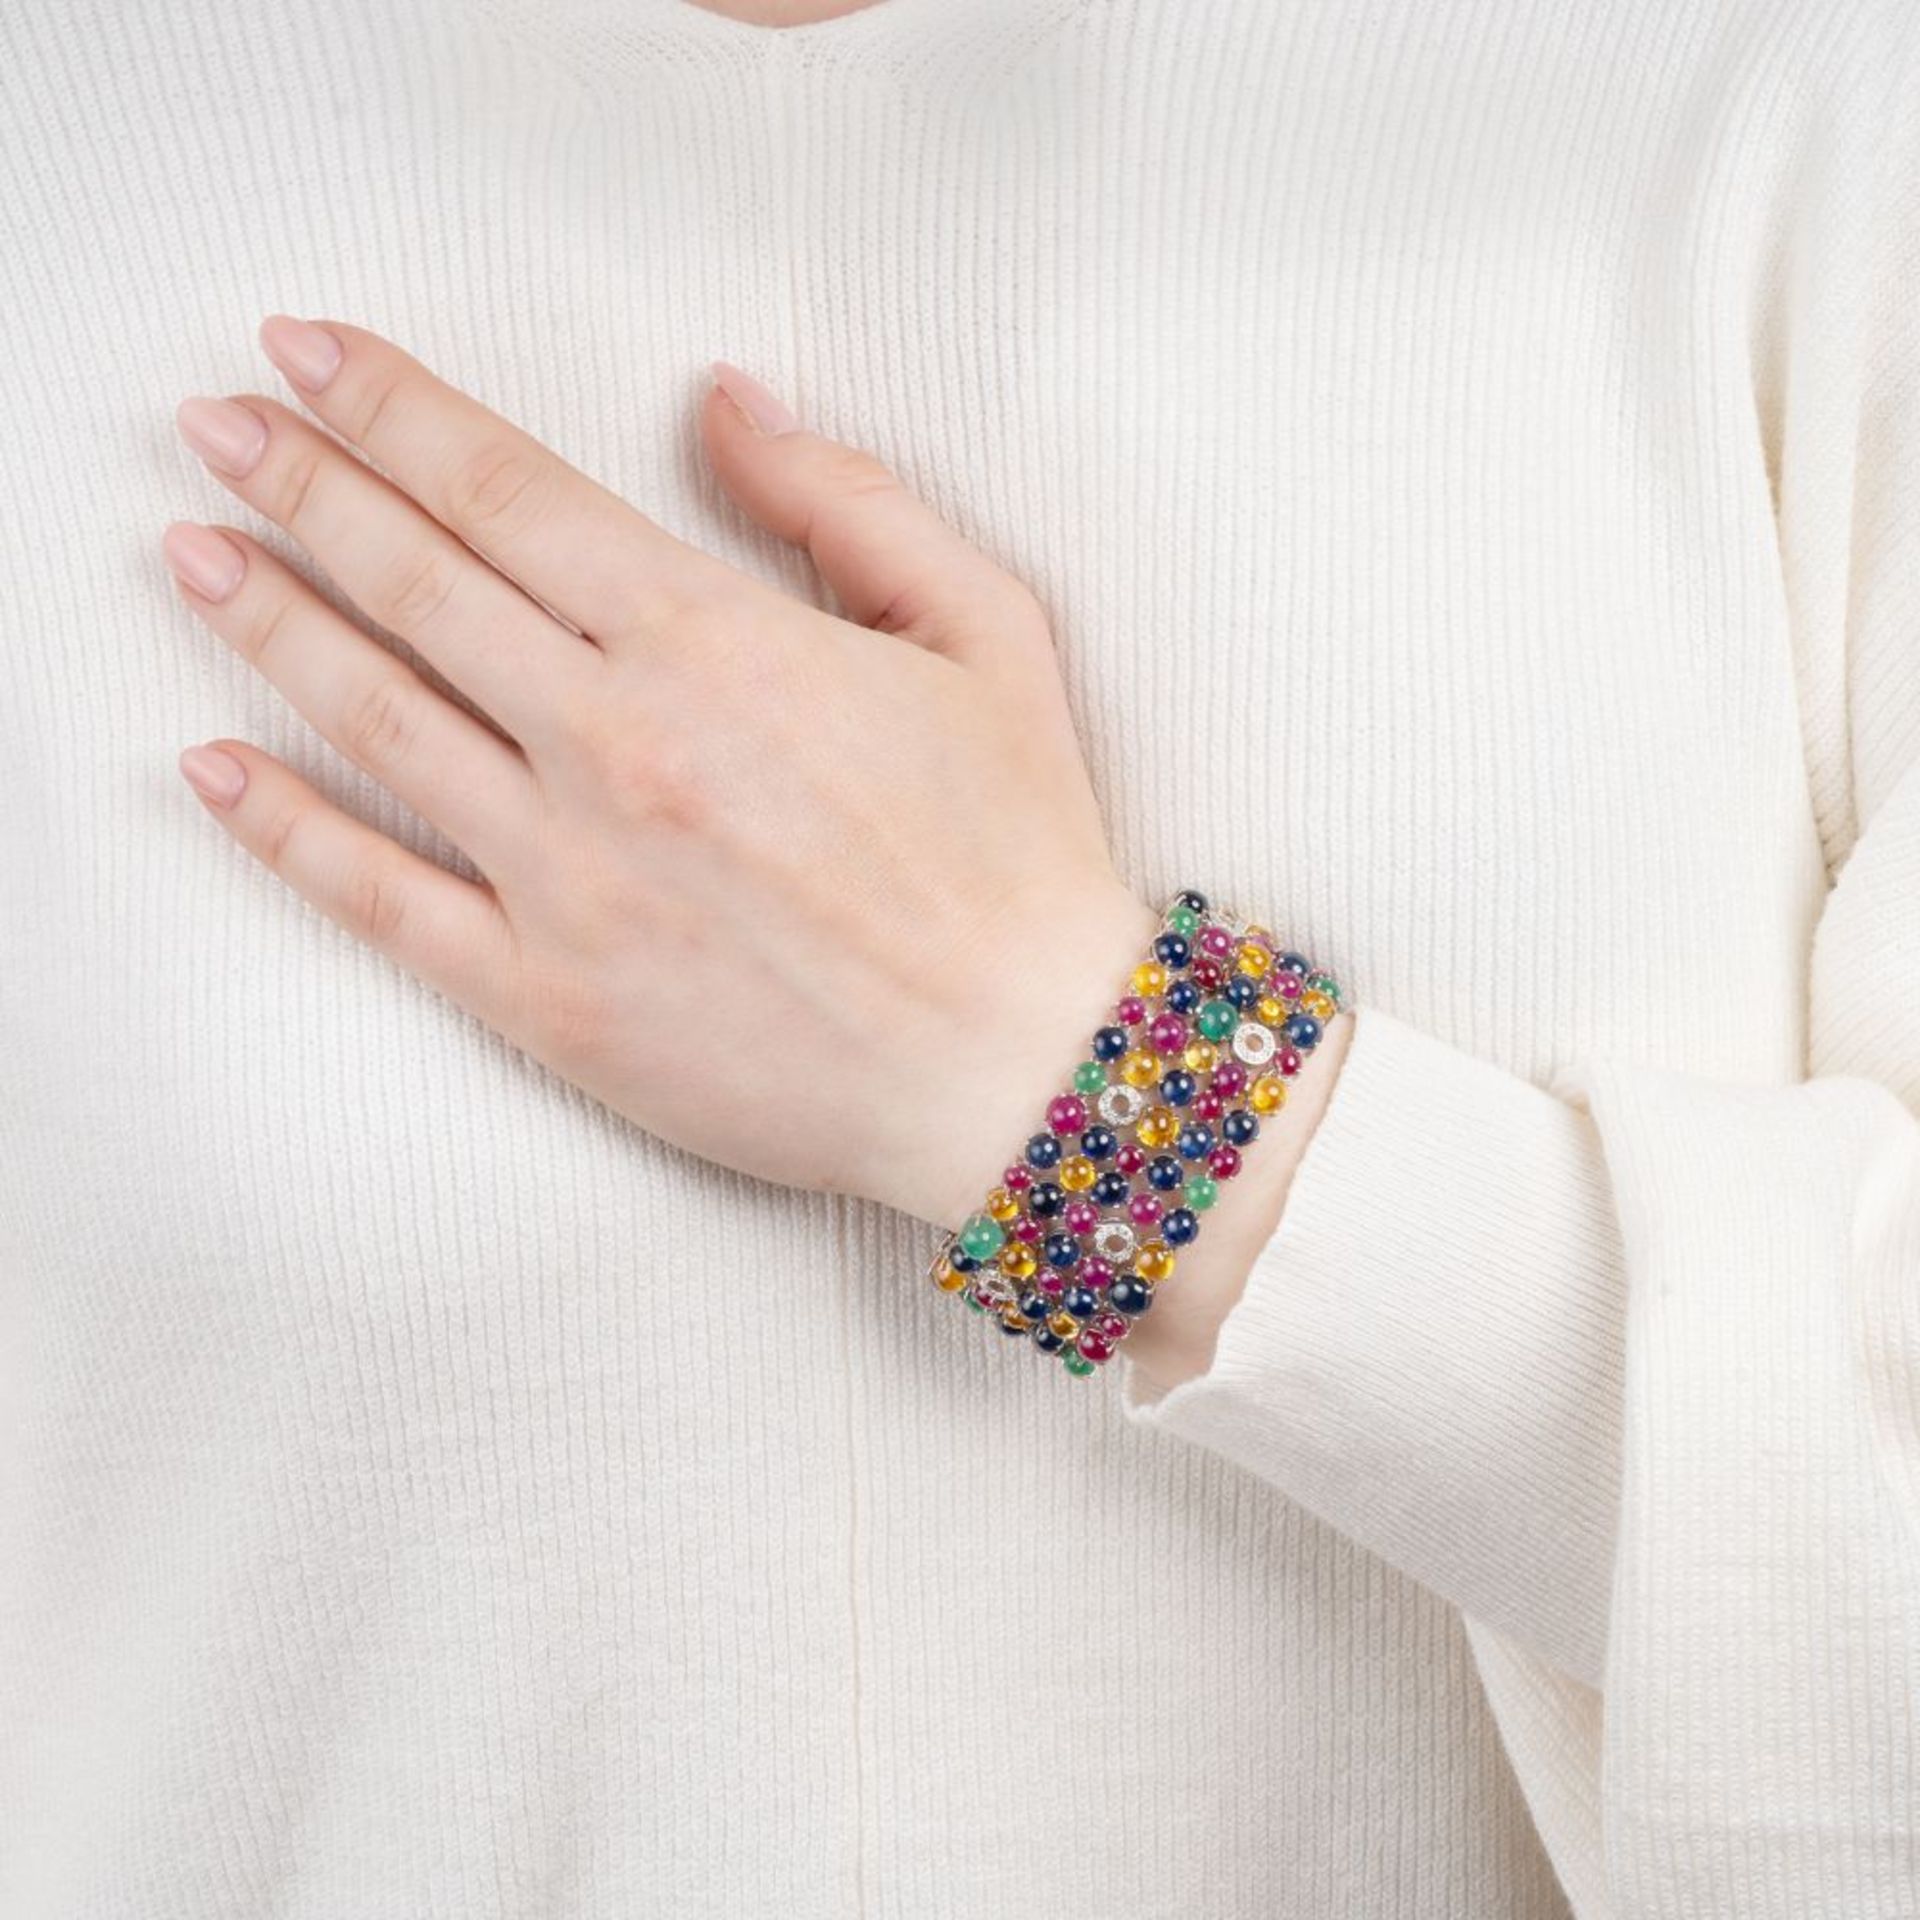 A Colourful Precious Stones Bracelet 'Tutti Frutti'. - Image 4 of 4